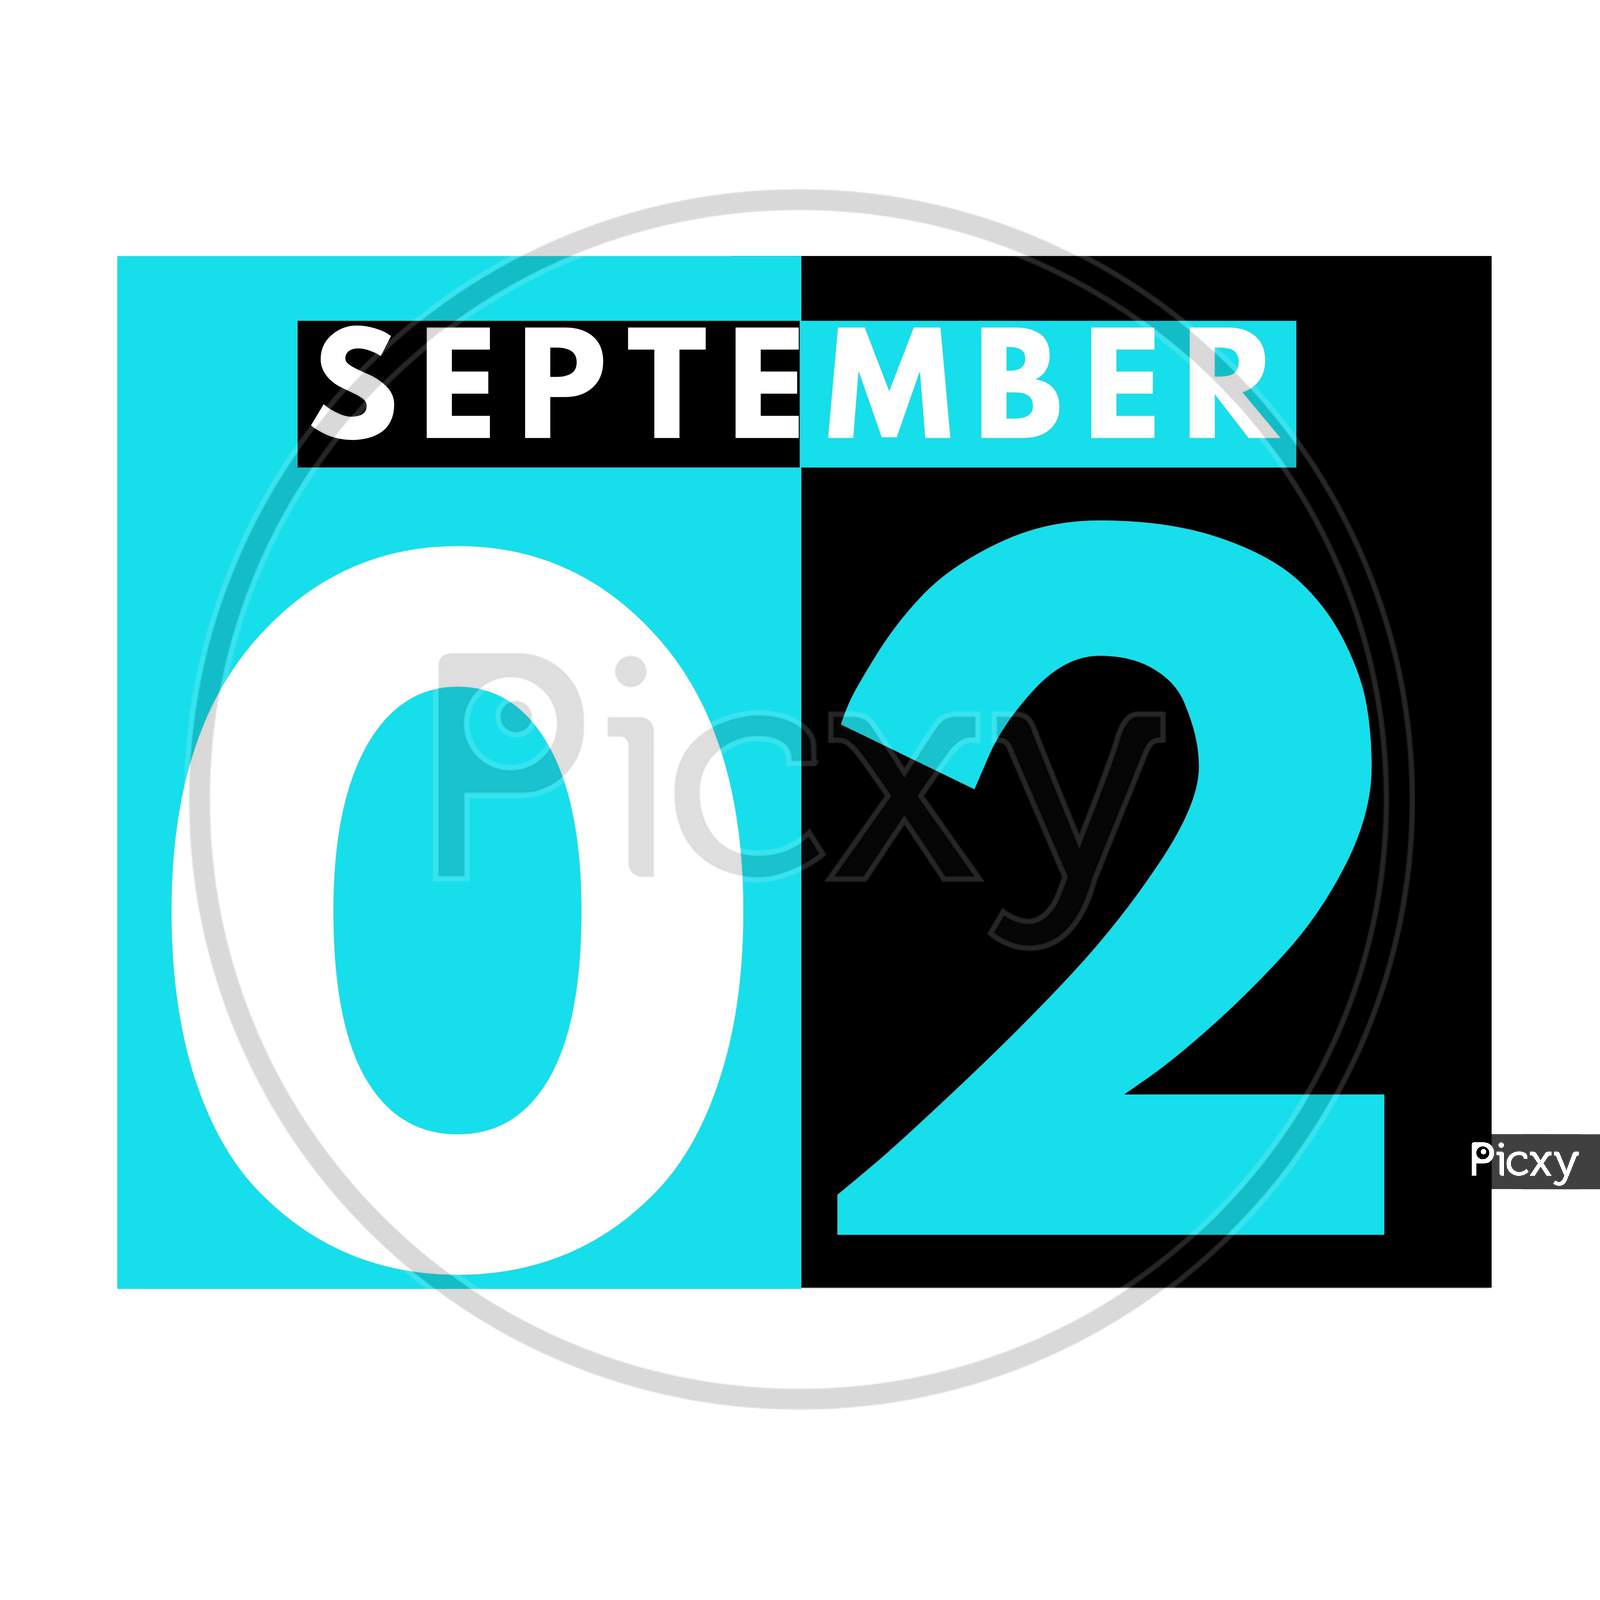 September 2 . Modern Daily Calendar Icon .Date ,Day, Month .Calendar For The Month Of September